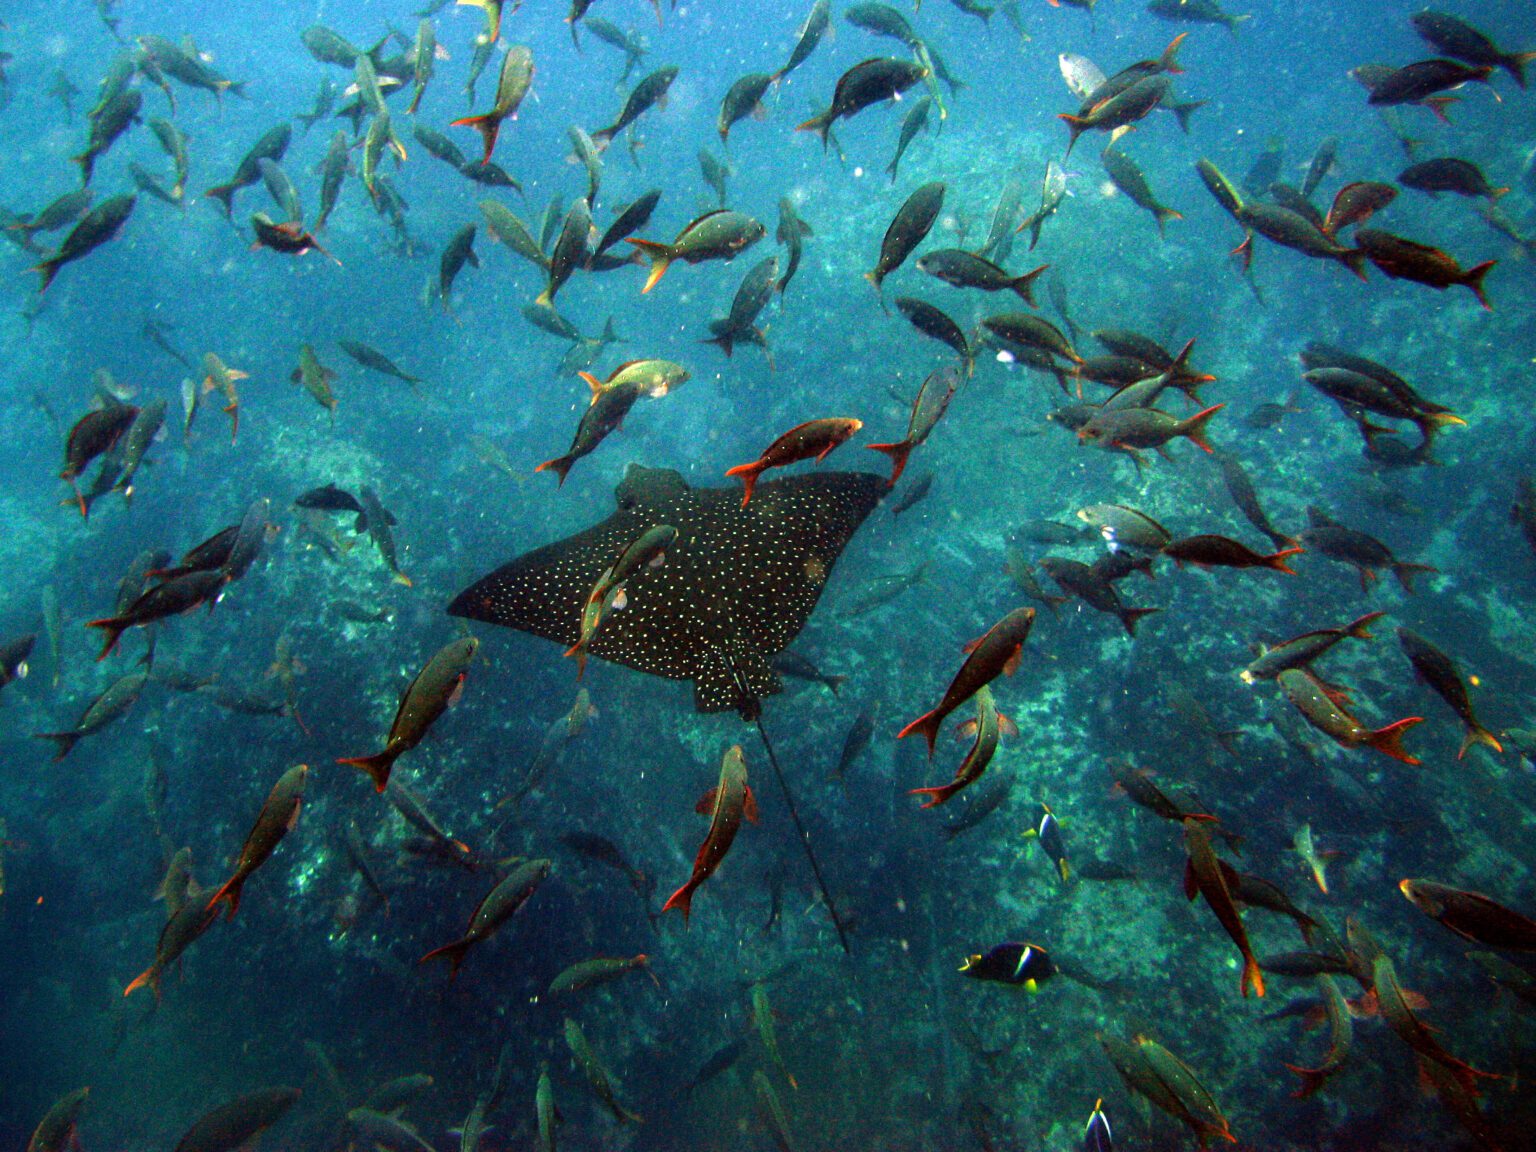 sting ray swimming among a school of fish